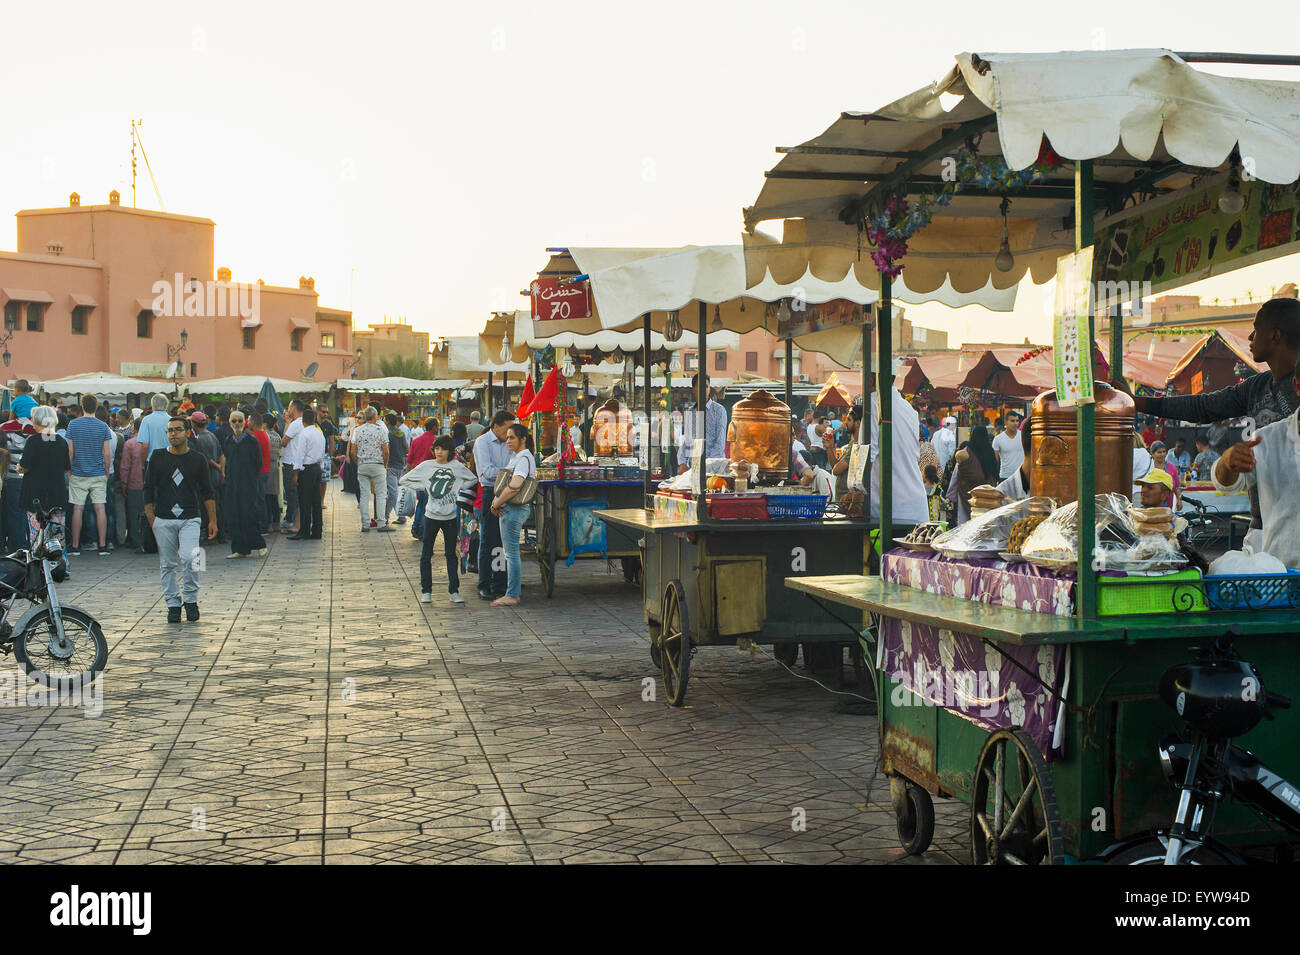 Volk und Stände mit Essen, Platz Djemaa el Fna, UNESCO-Weltkulturerbe, Marrakesch, Marokko Stockfoto